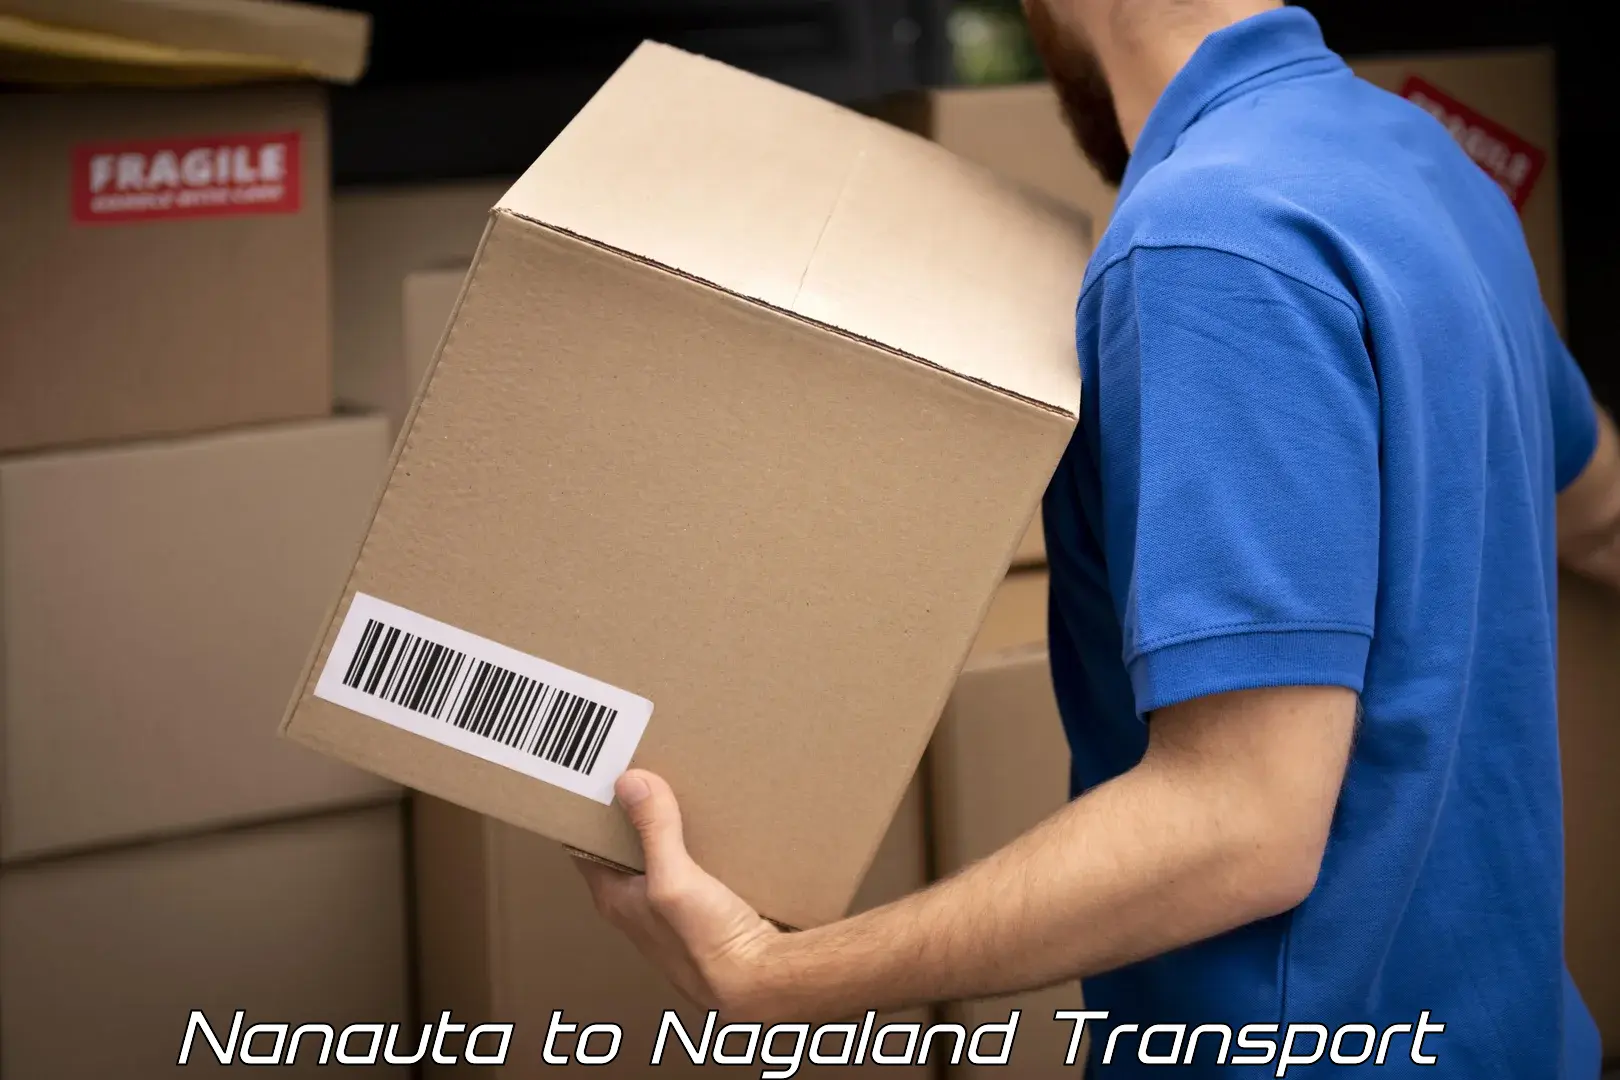 Two wheeler parcel service Nanauta to Nagaland